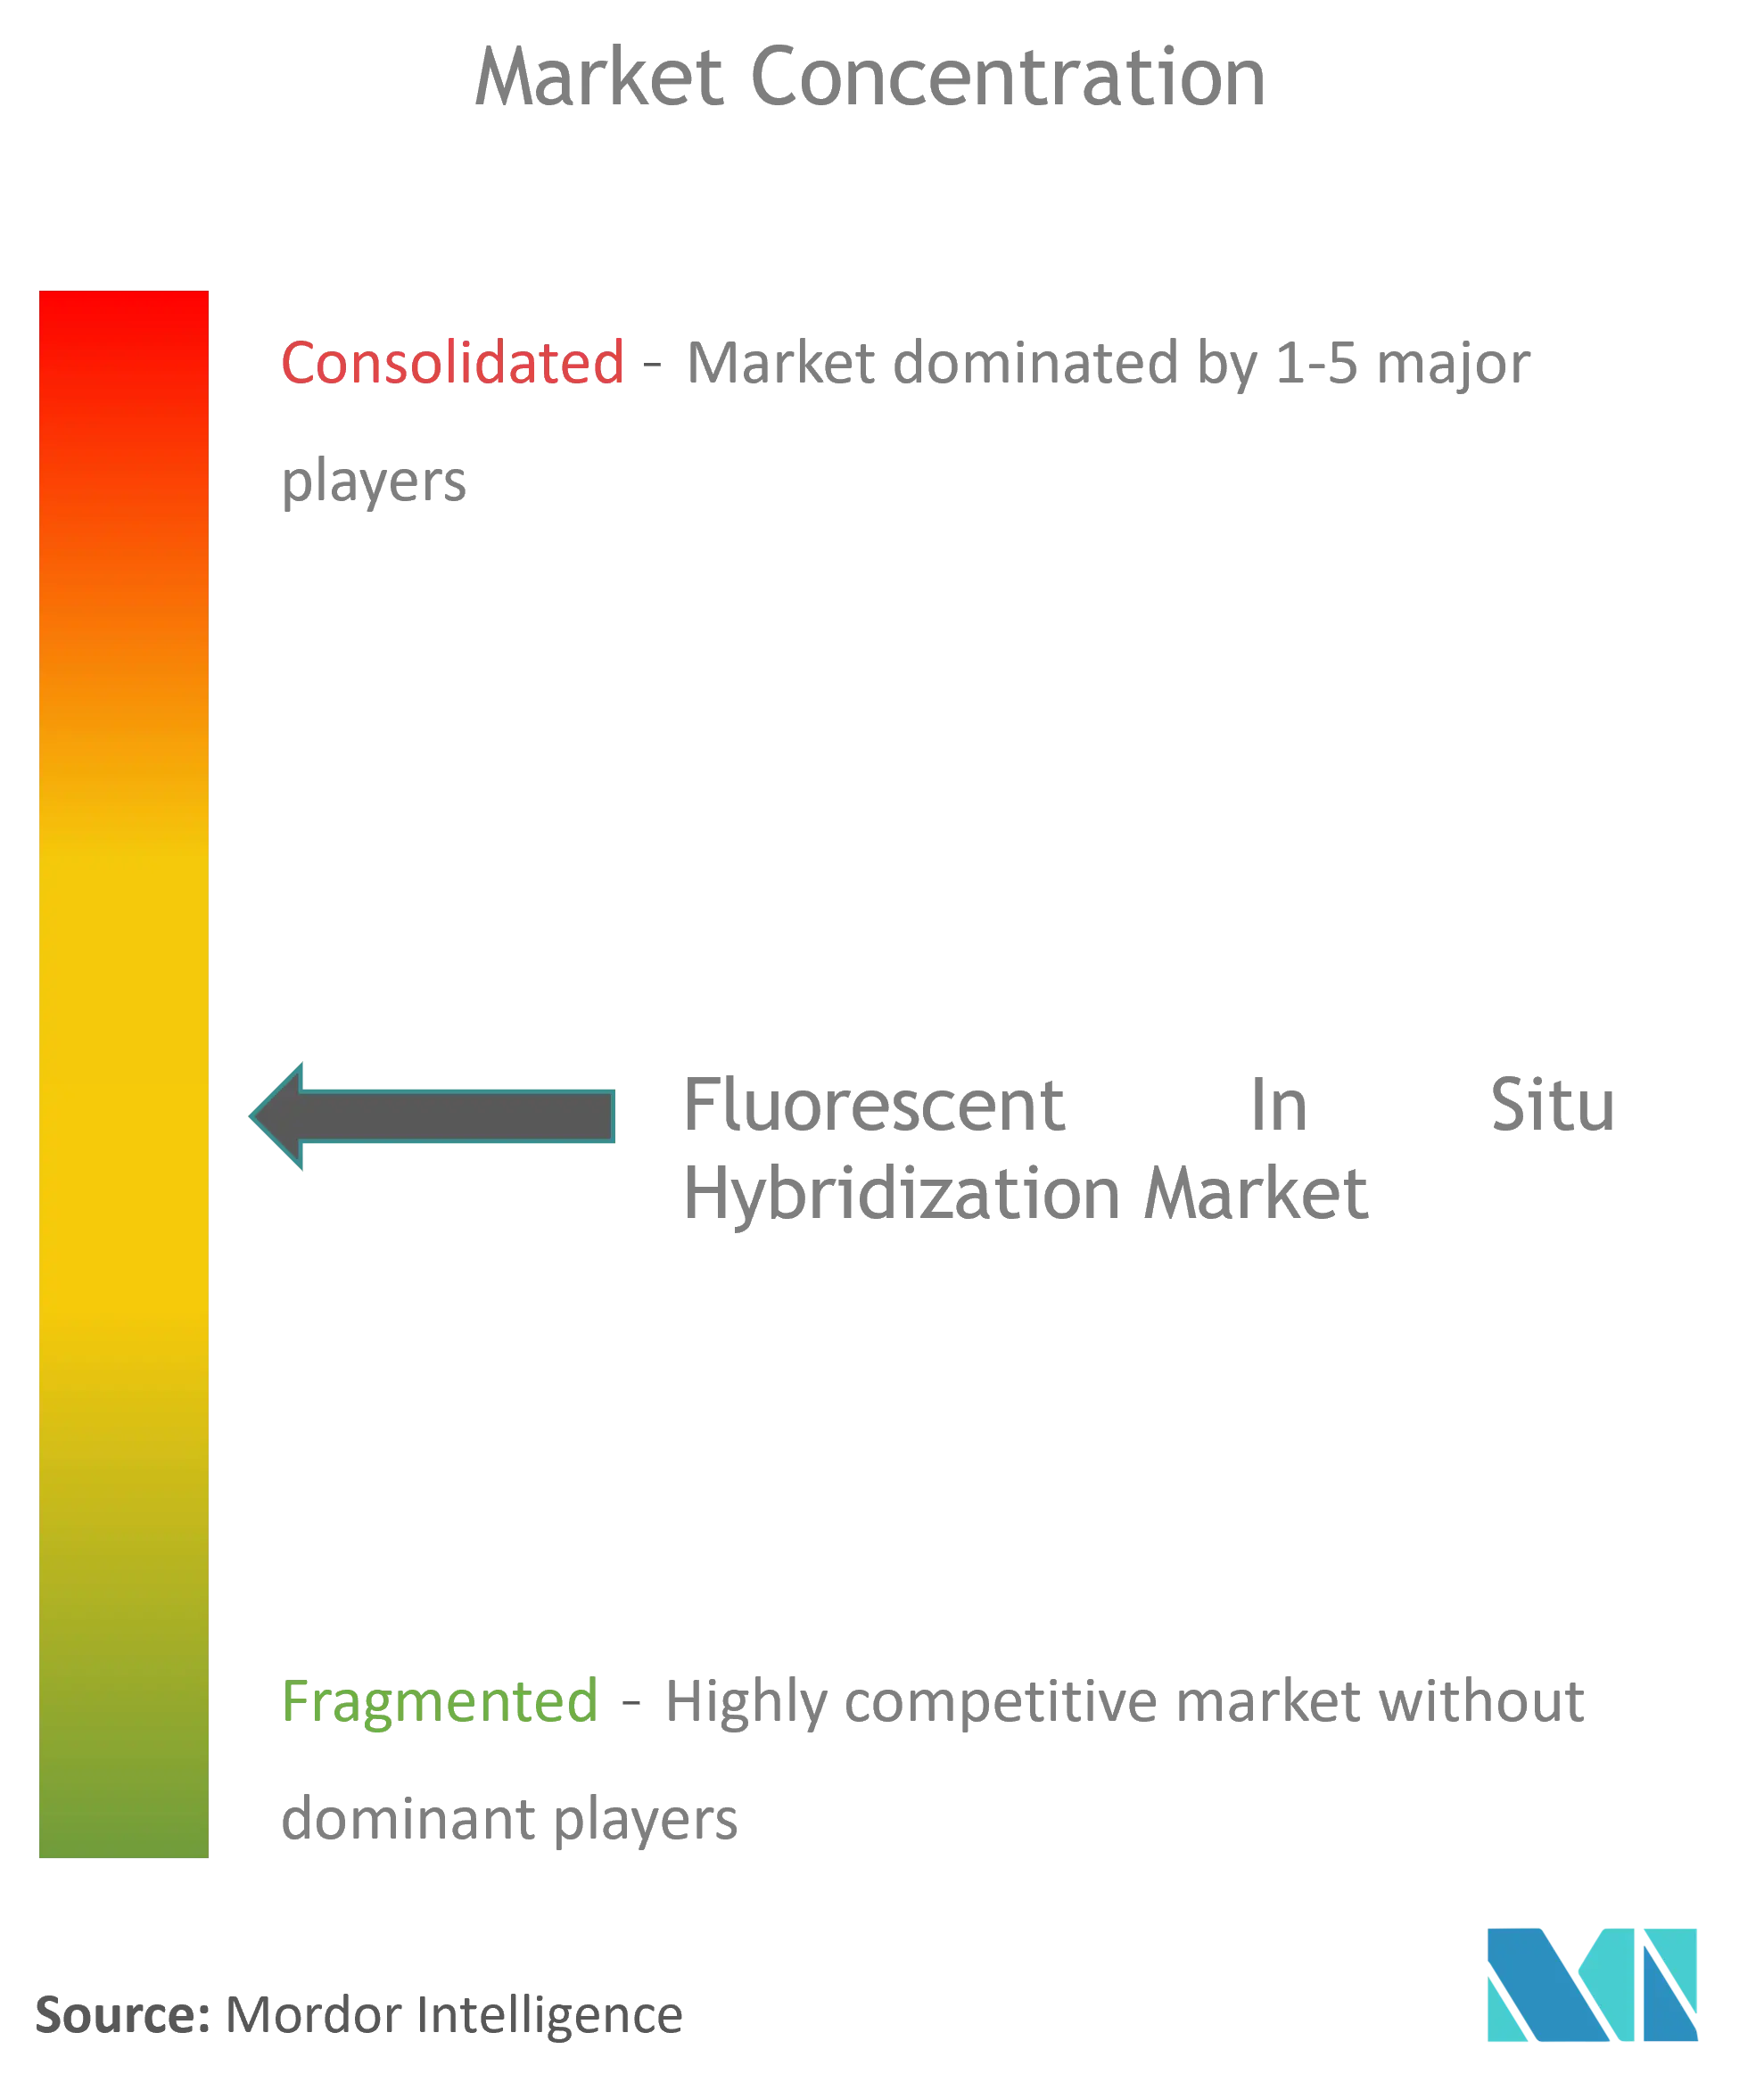 Fluorescent In Situ Hybridization Market Concentration